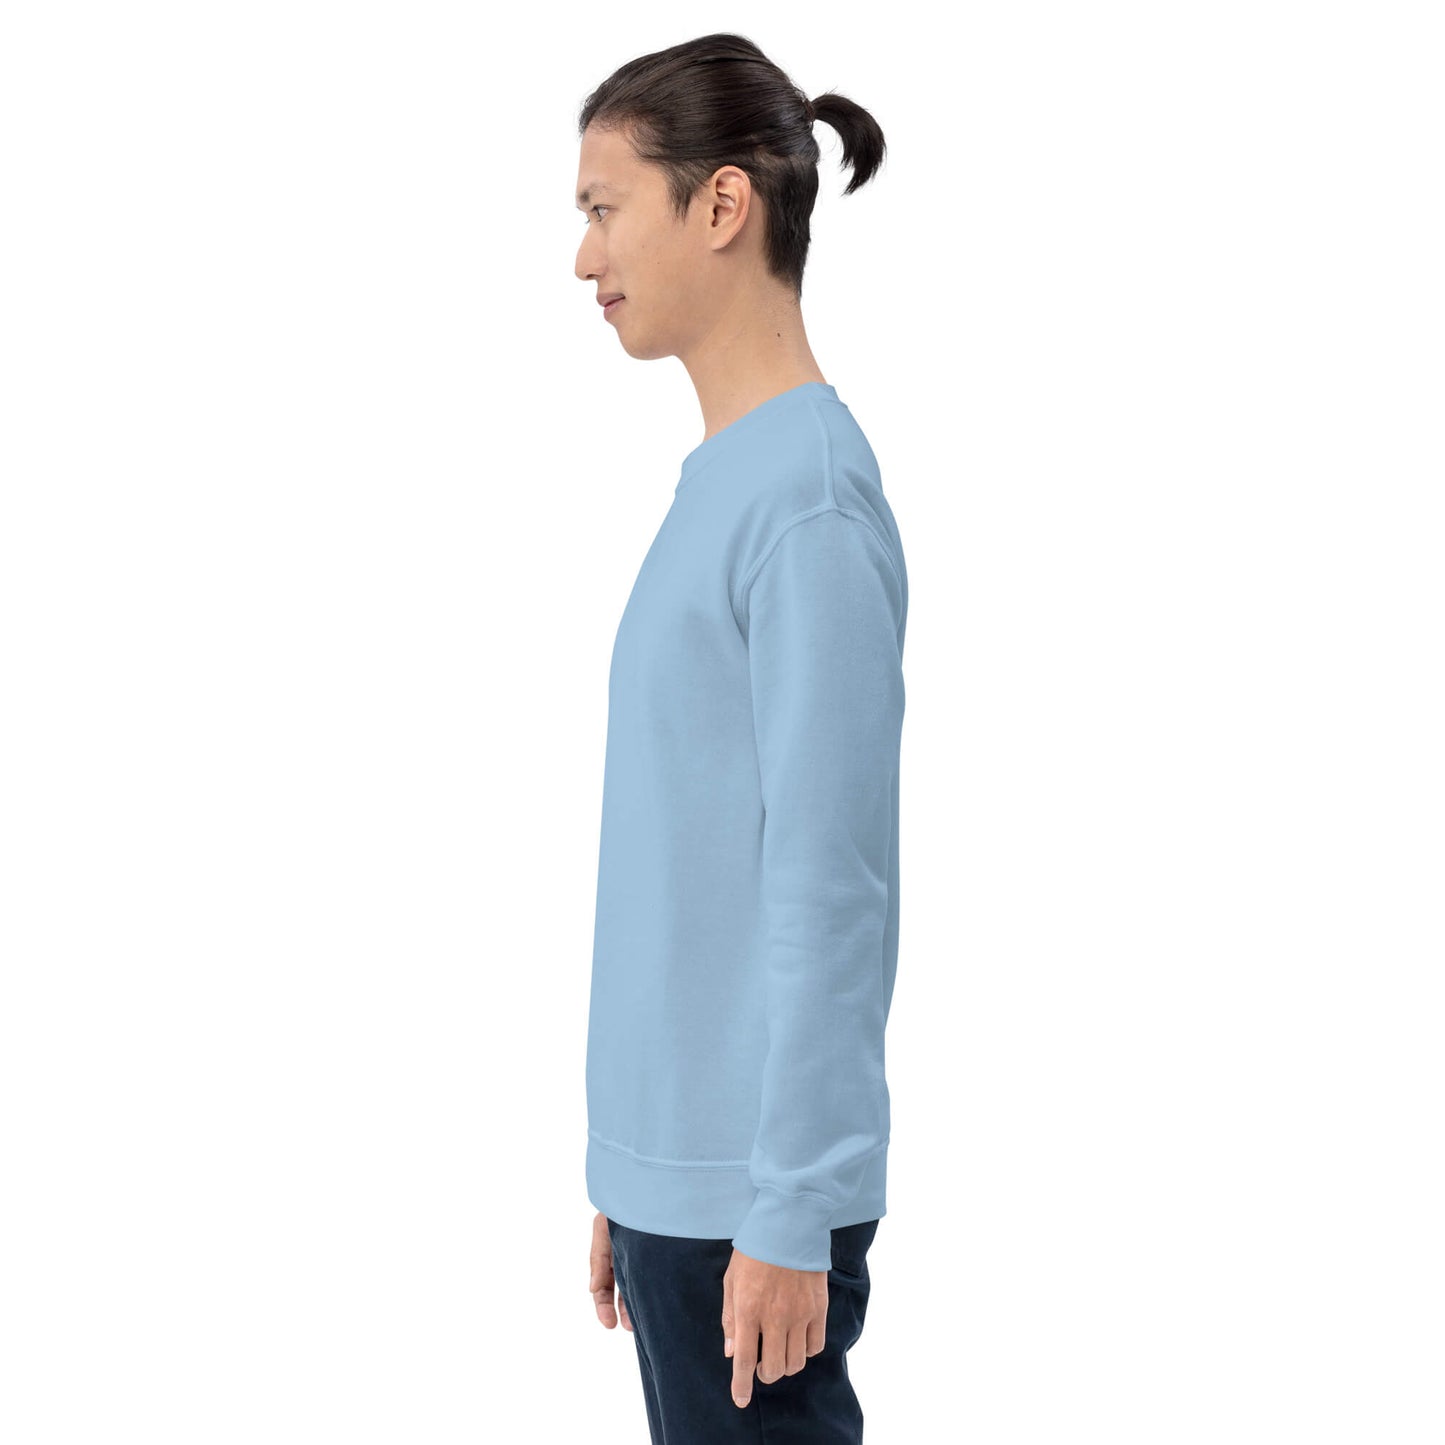 Sweatshirt Light Blue i Will Wander Fashion